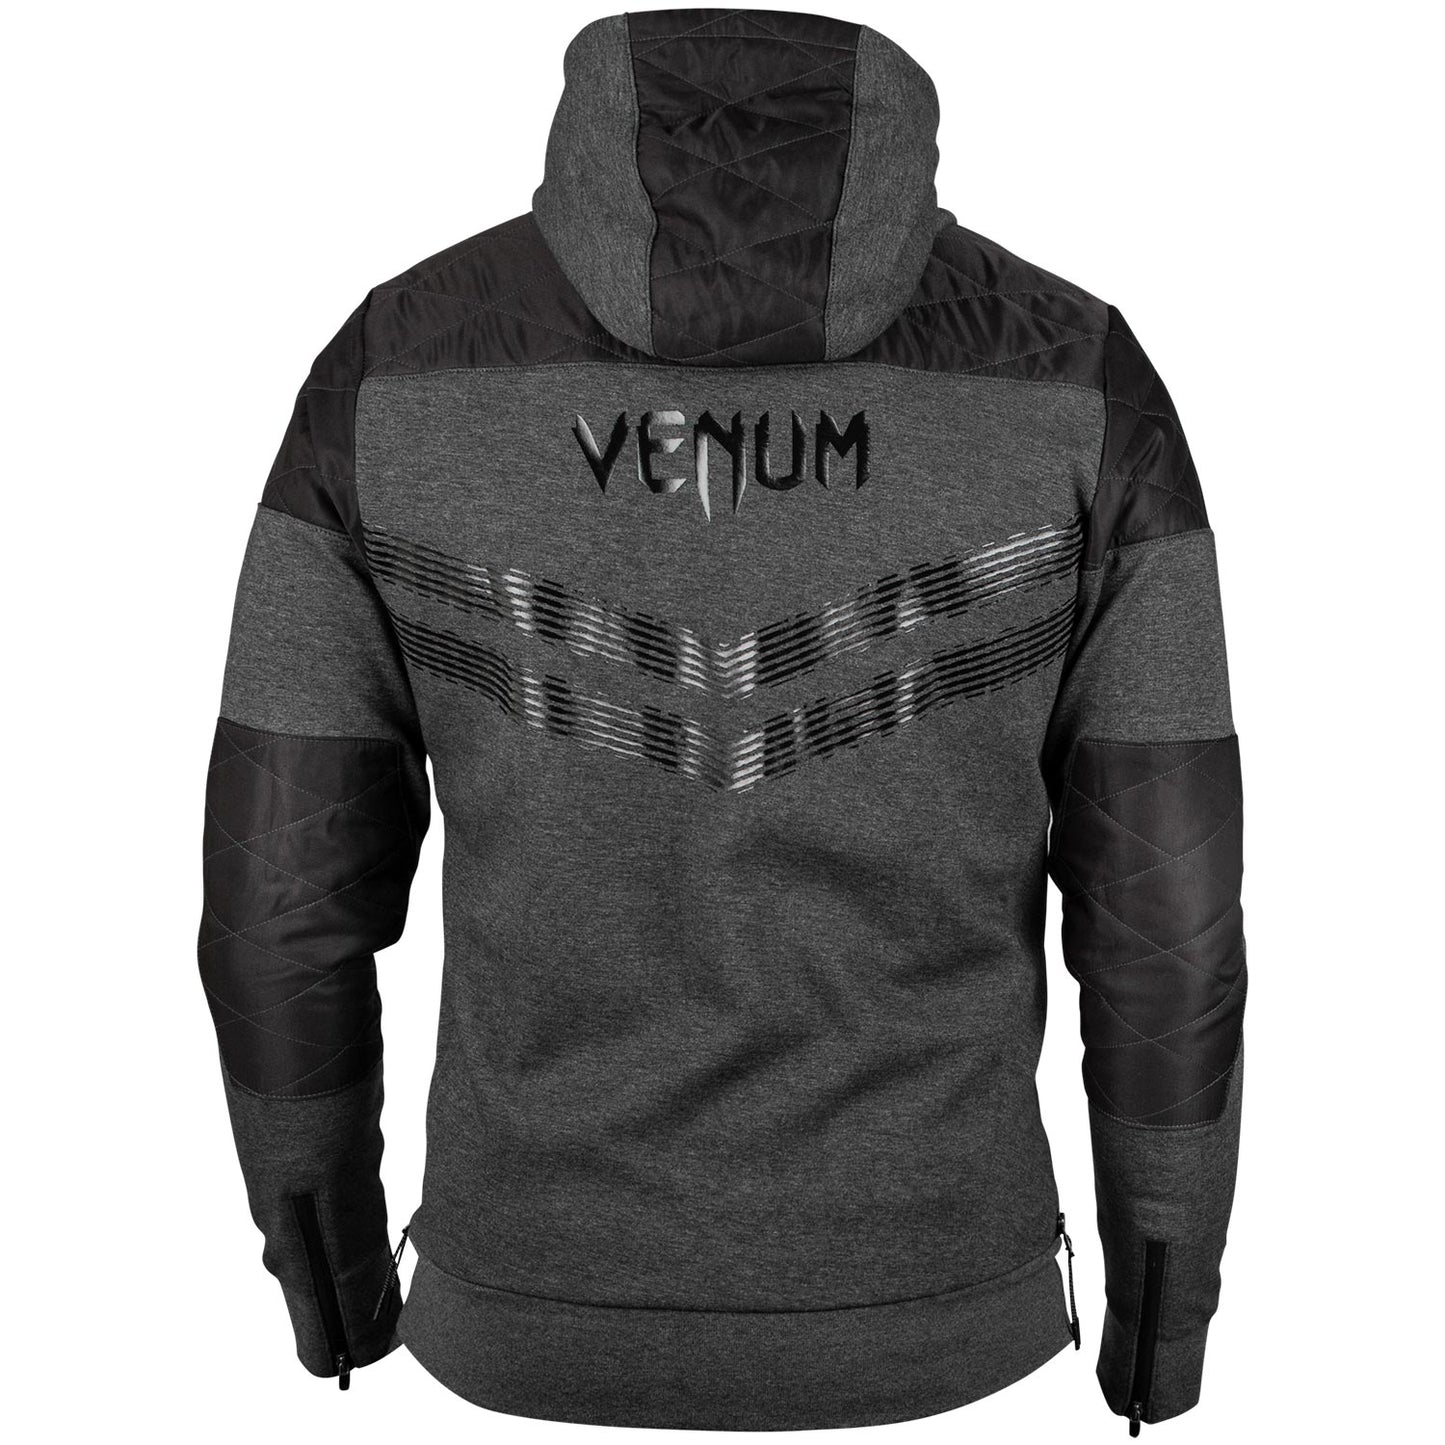 Sweatshirt Venum Laser 2.0 - Grau meliert